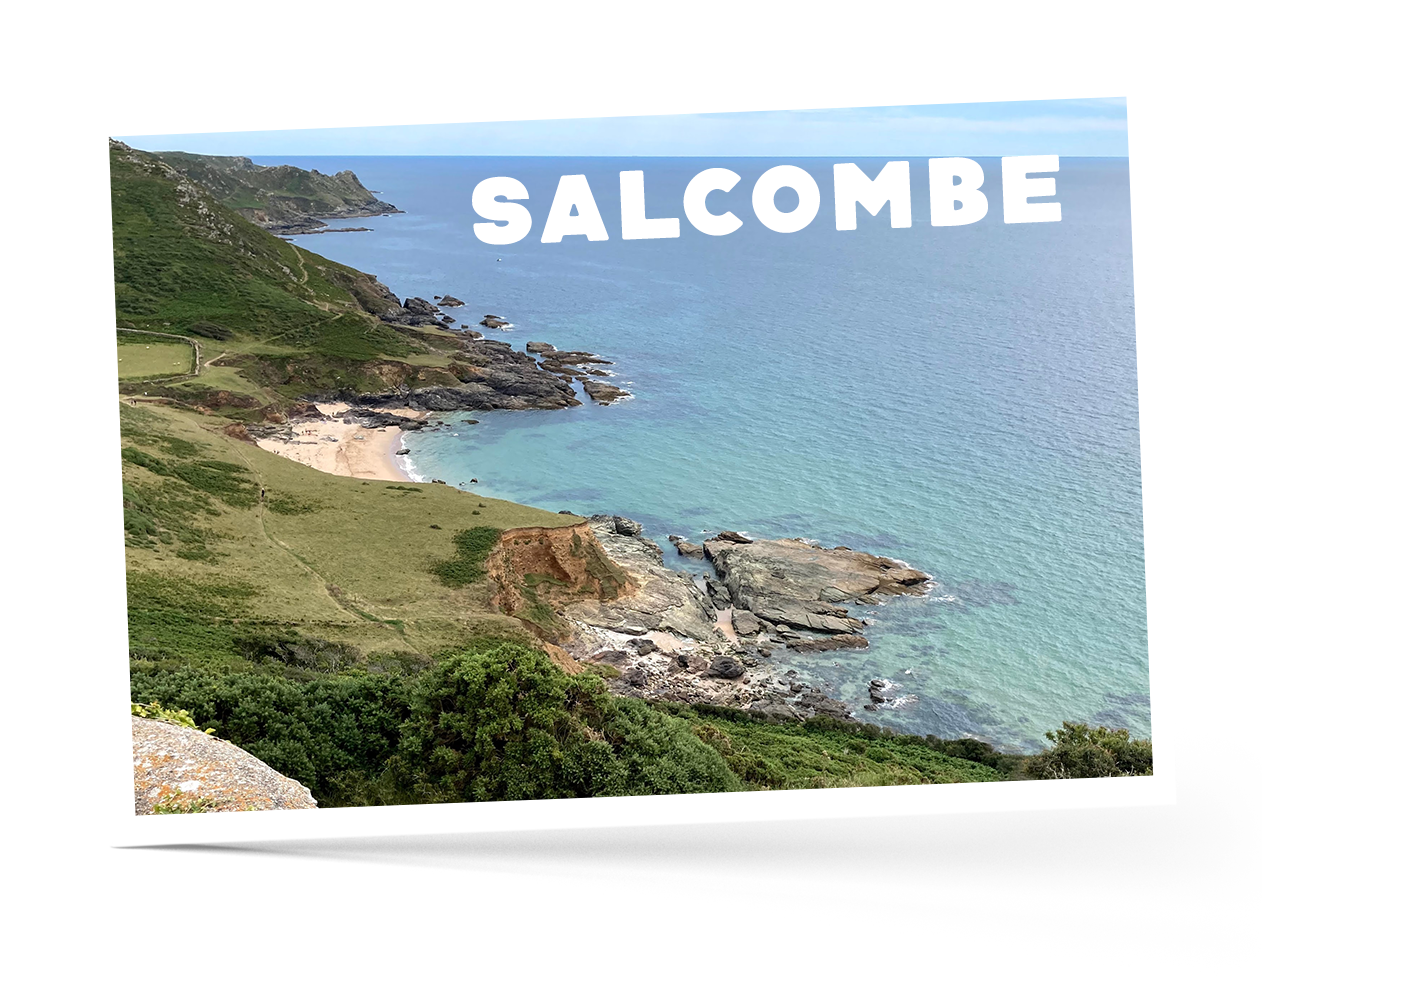 Grass covered cliffs and sandy beaches in Salcombe, Devon meeting a calm blue sea